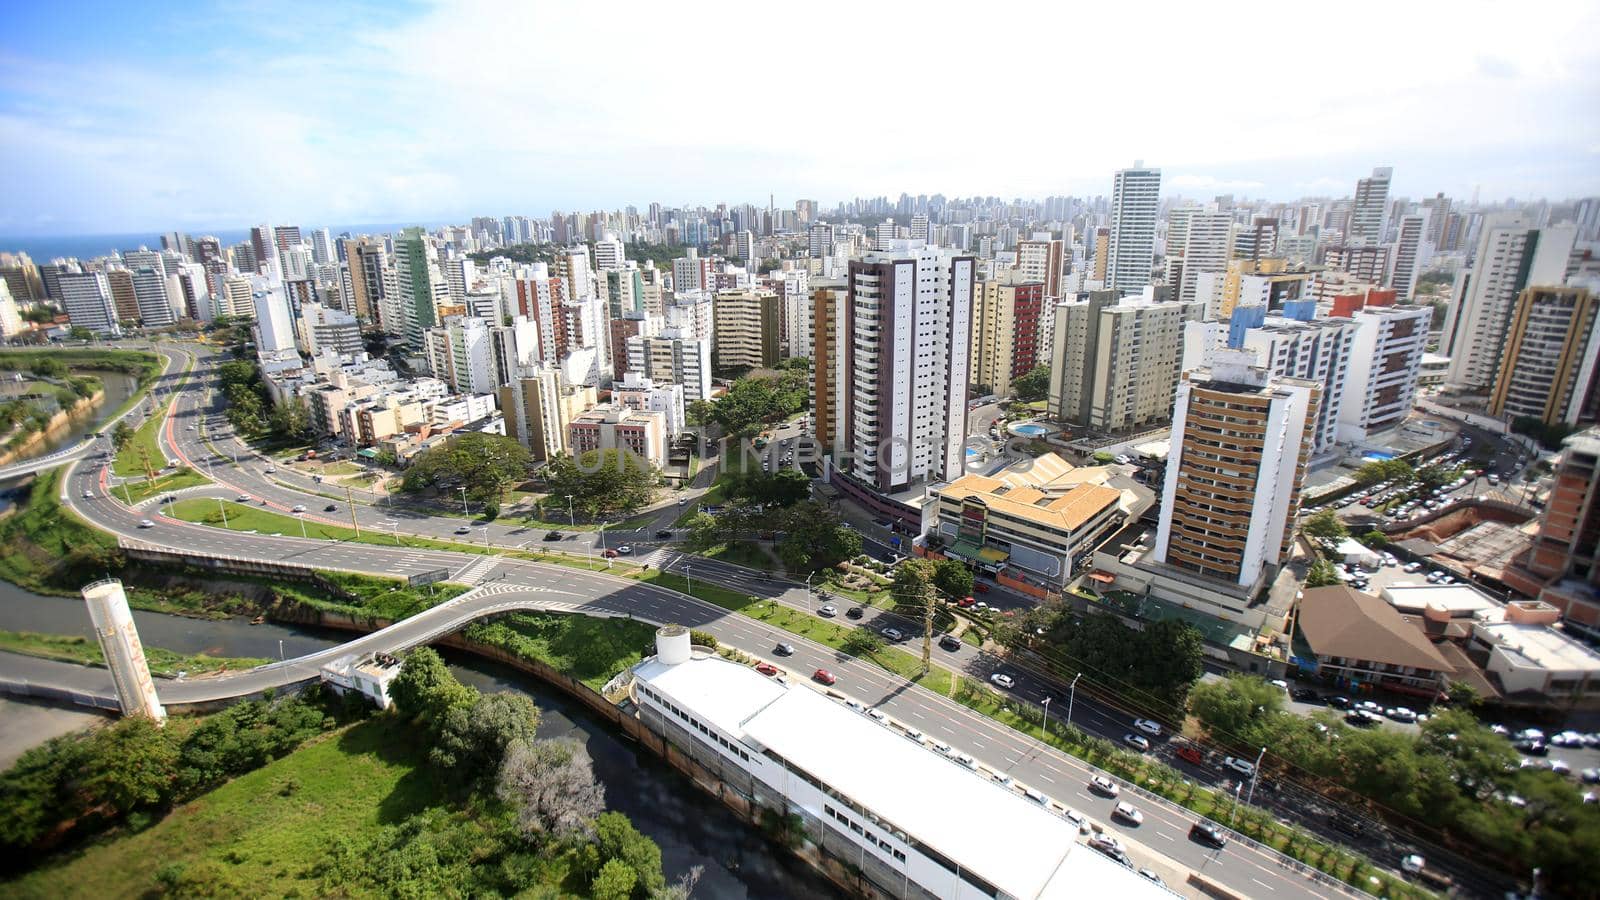 salvador, bahia, brazil - june 29, 2016: aerial view of residential buildings facades in Pituba district in Salvador city.